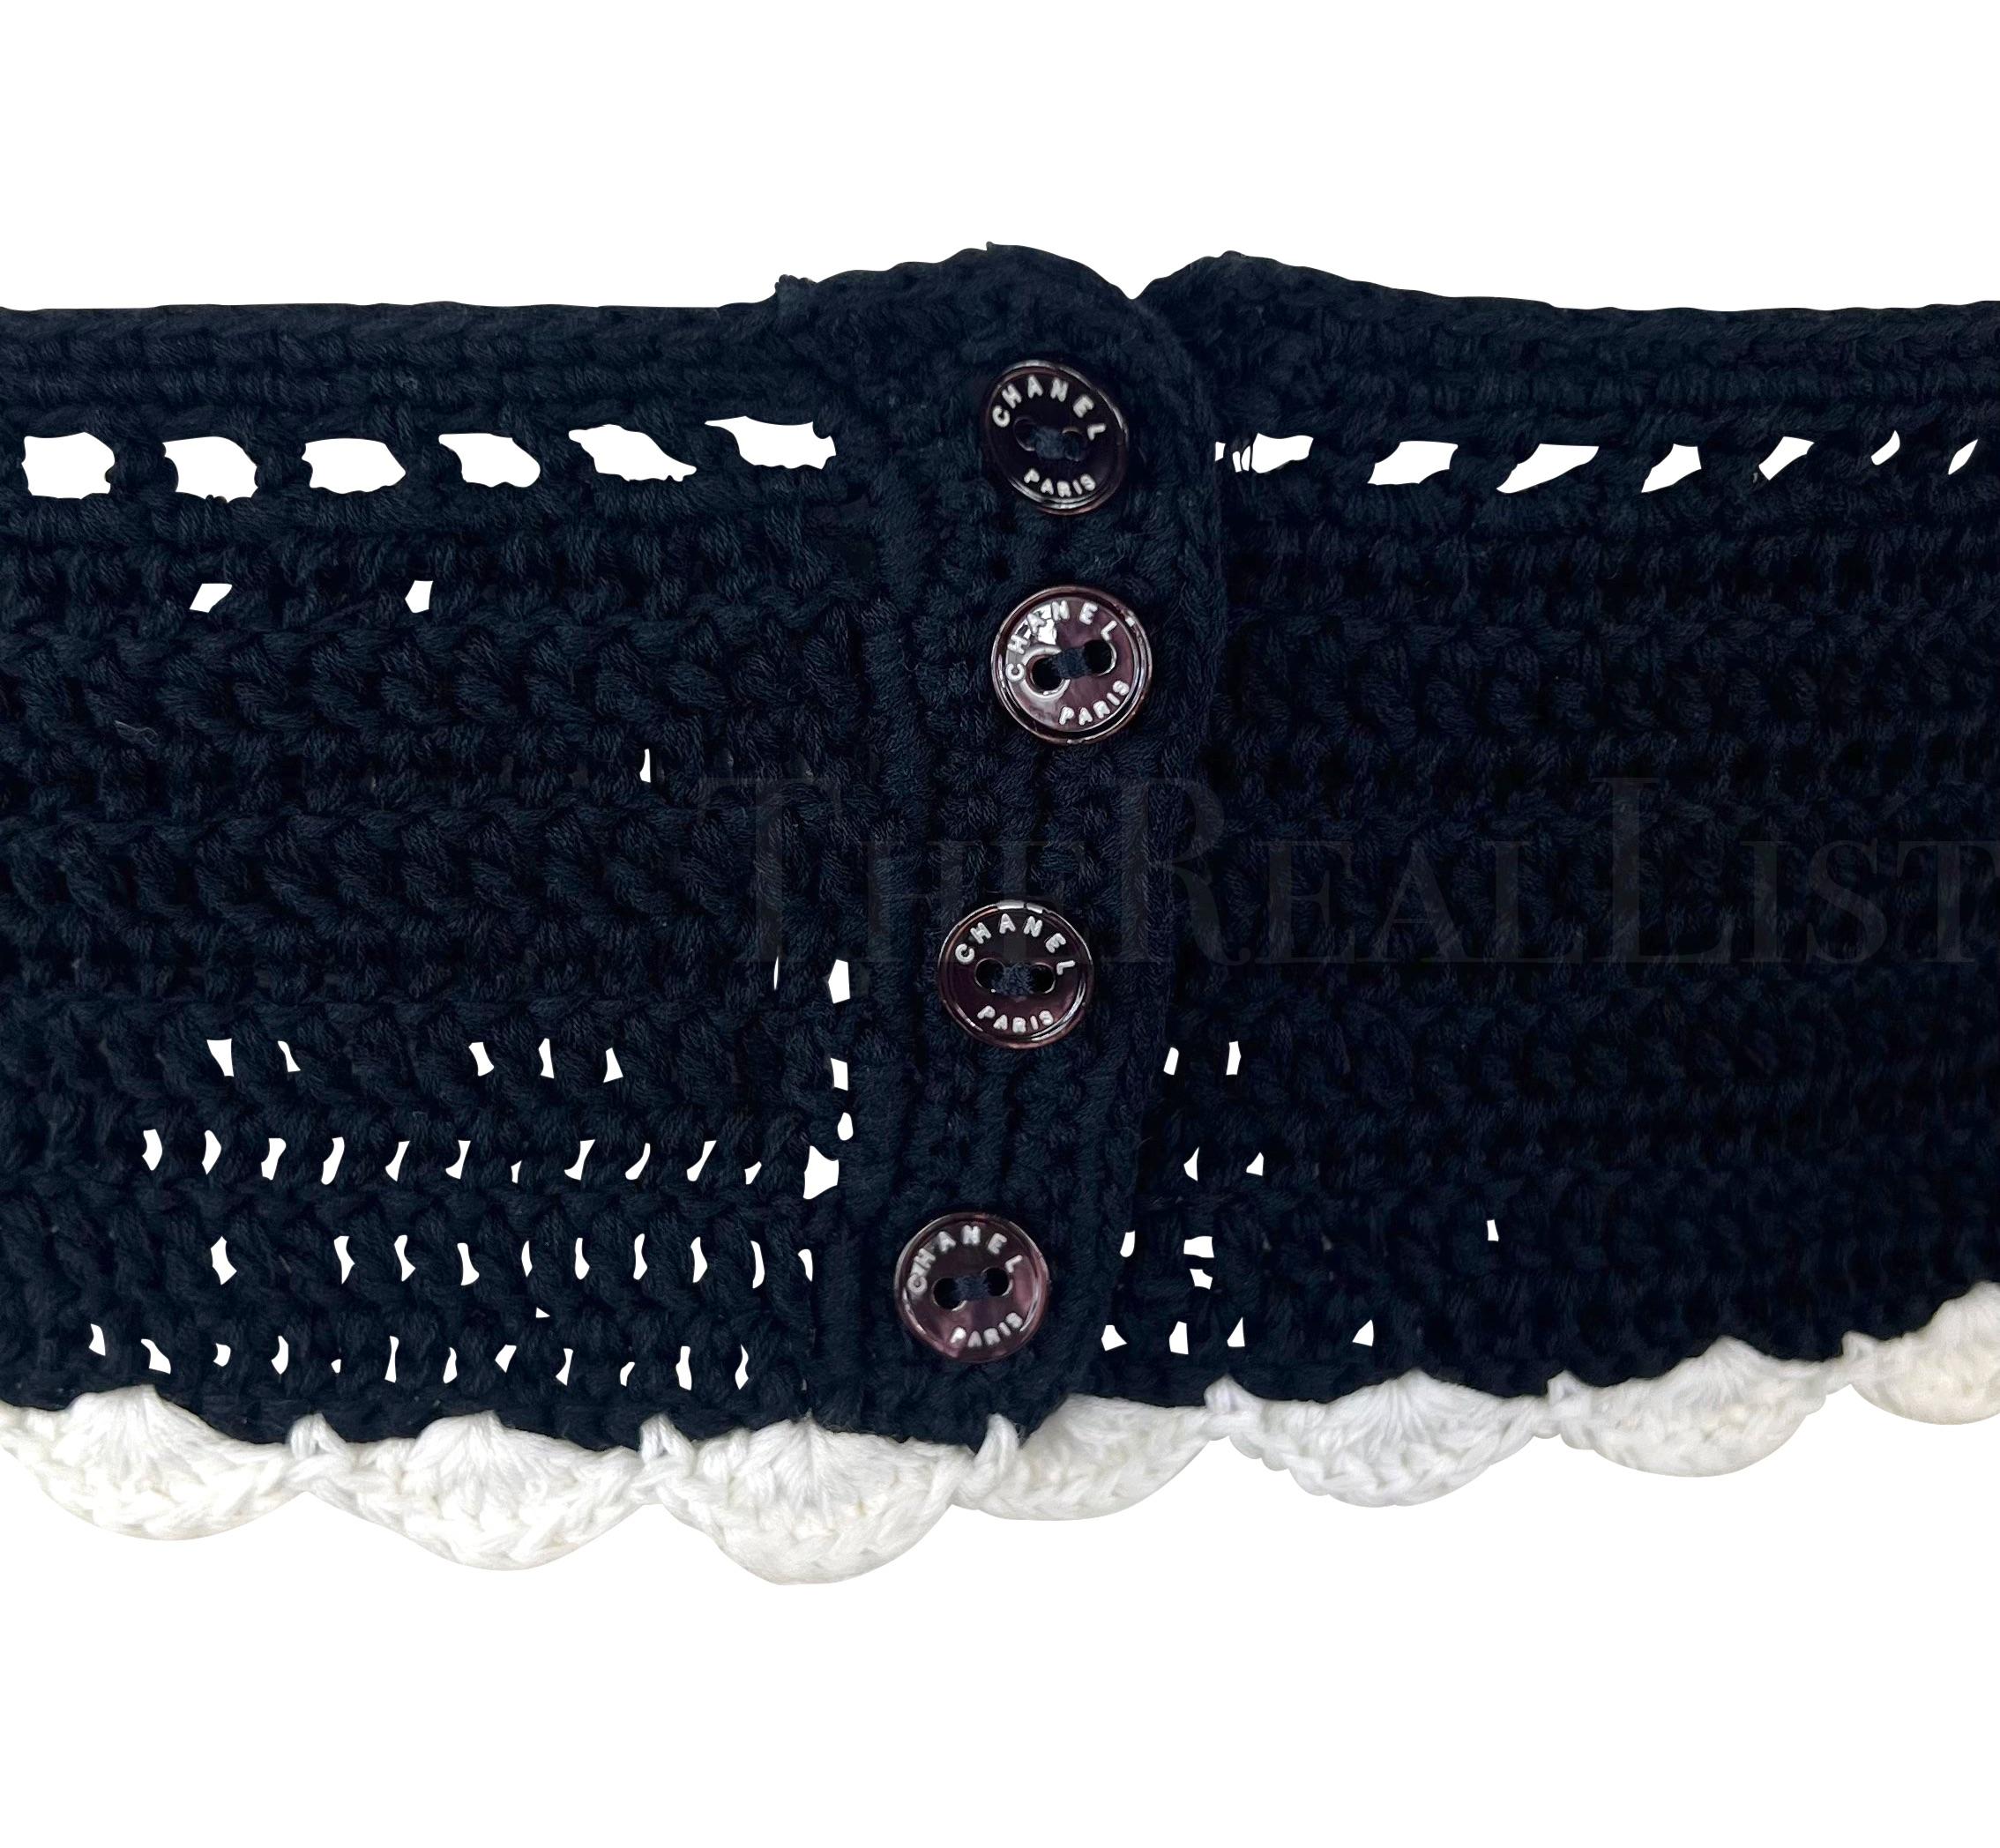 Women's S/S 2004 Chanel by Karl Lagerfeld Black Crochet Halterneck Bralette For Sale